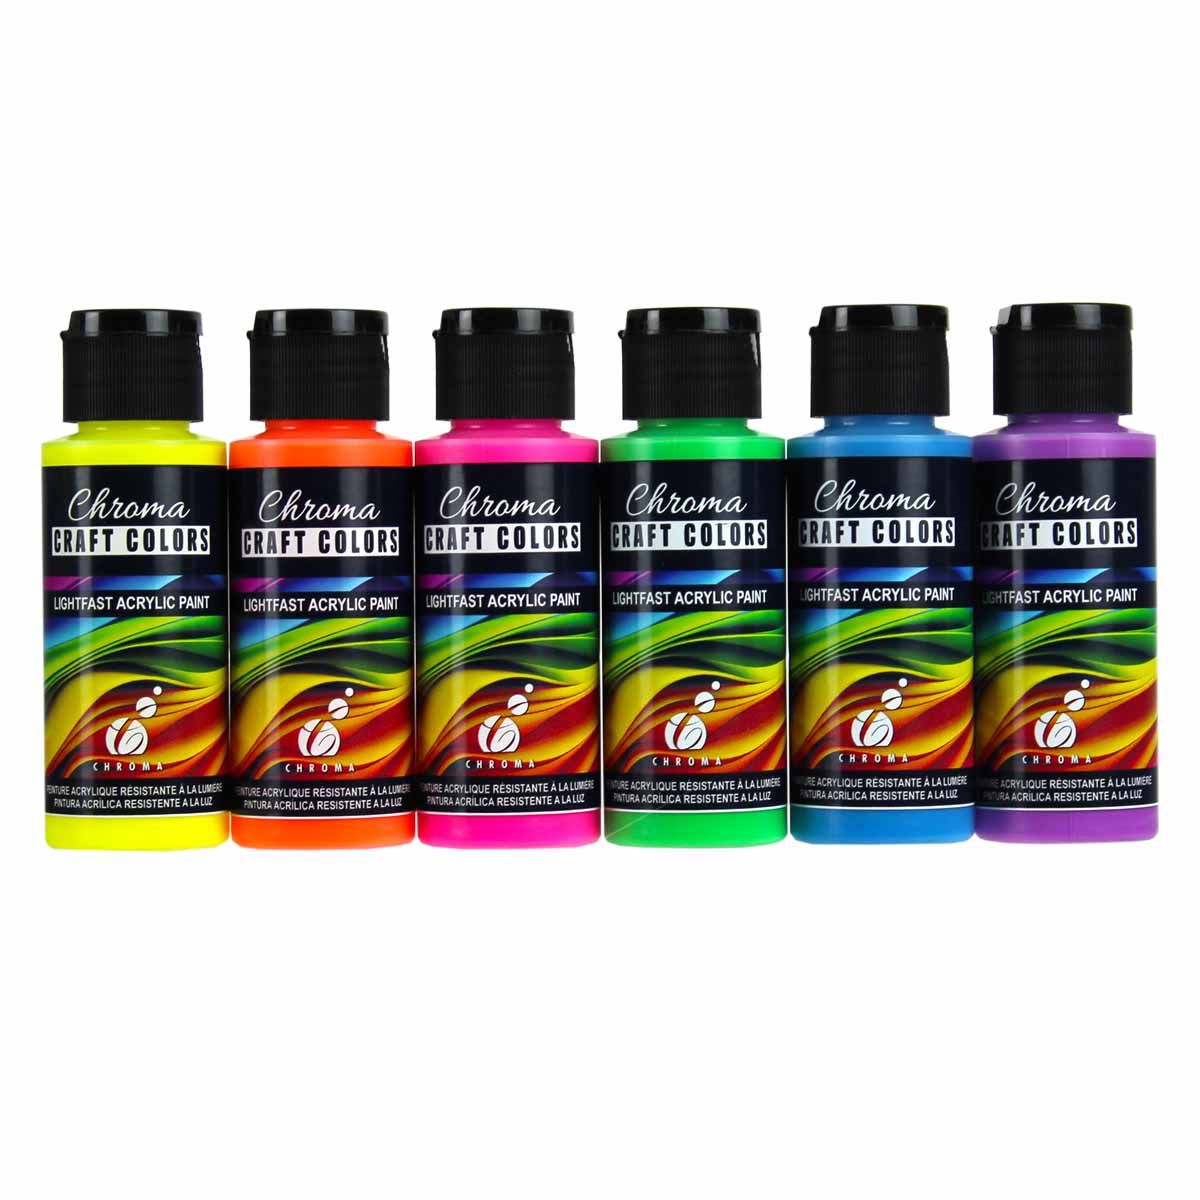 Chroma Acrylic Craft Paint Neon Set of 6, 2oz Bottles